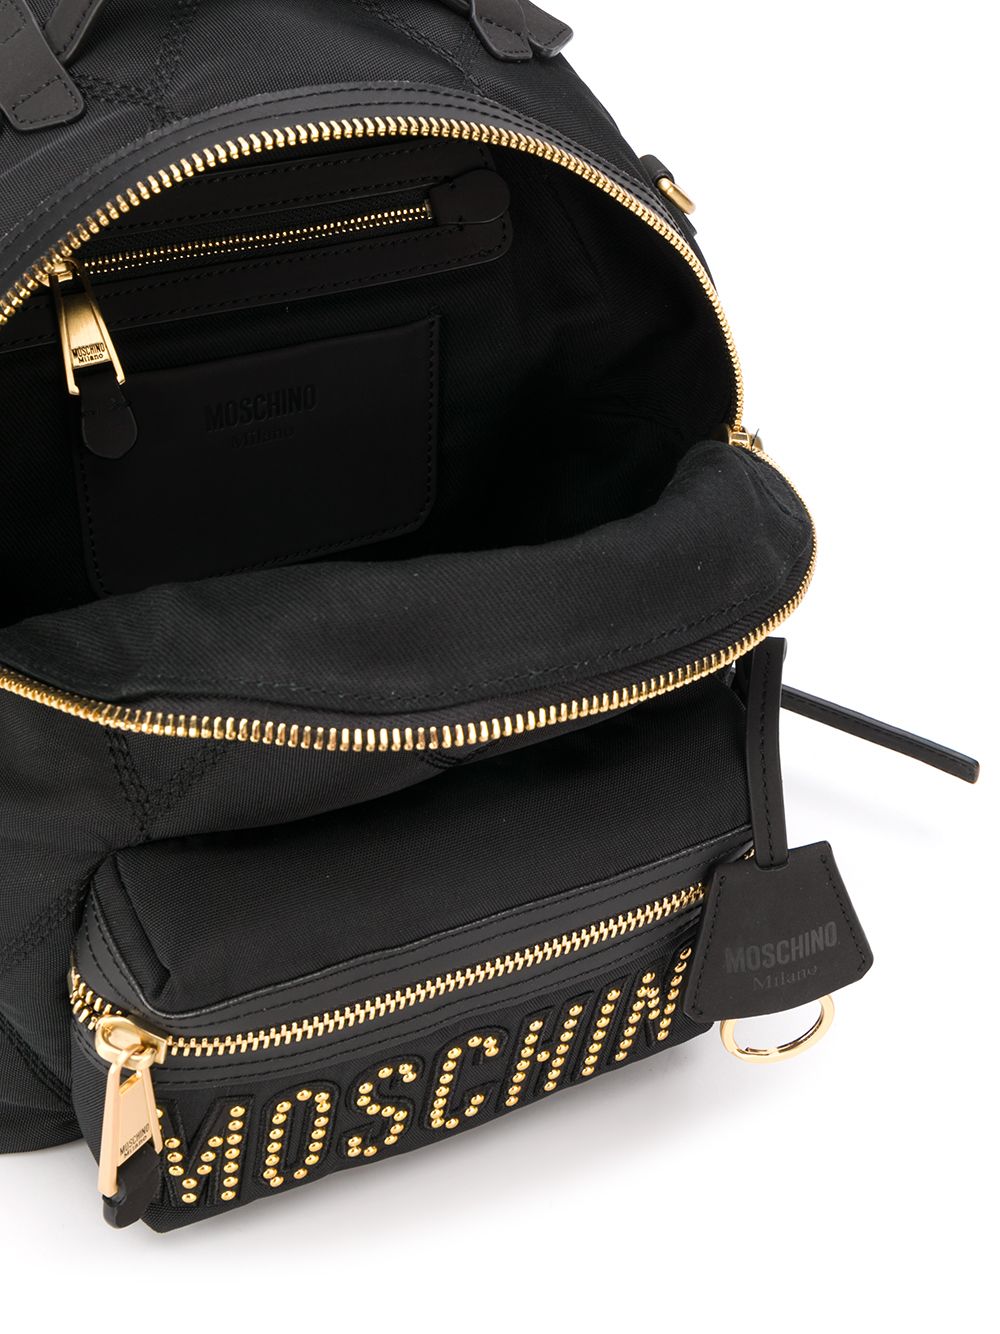 фото Moschino рюкзак с заклепками и логотипом